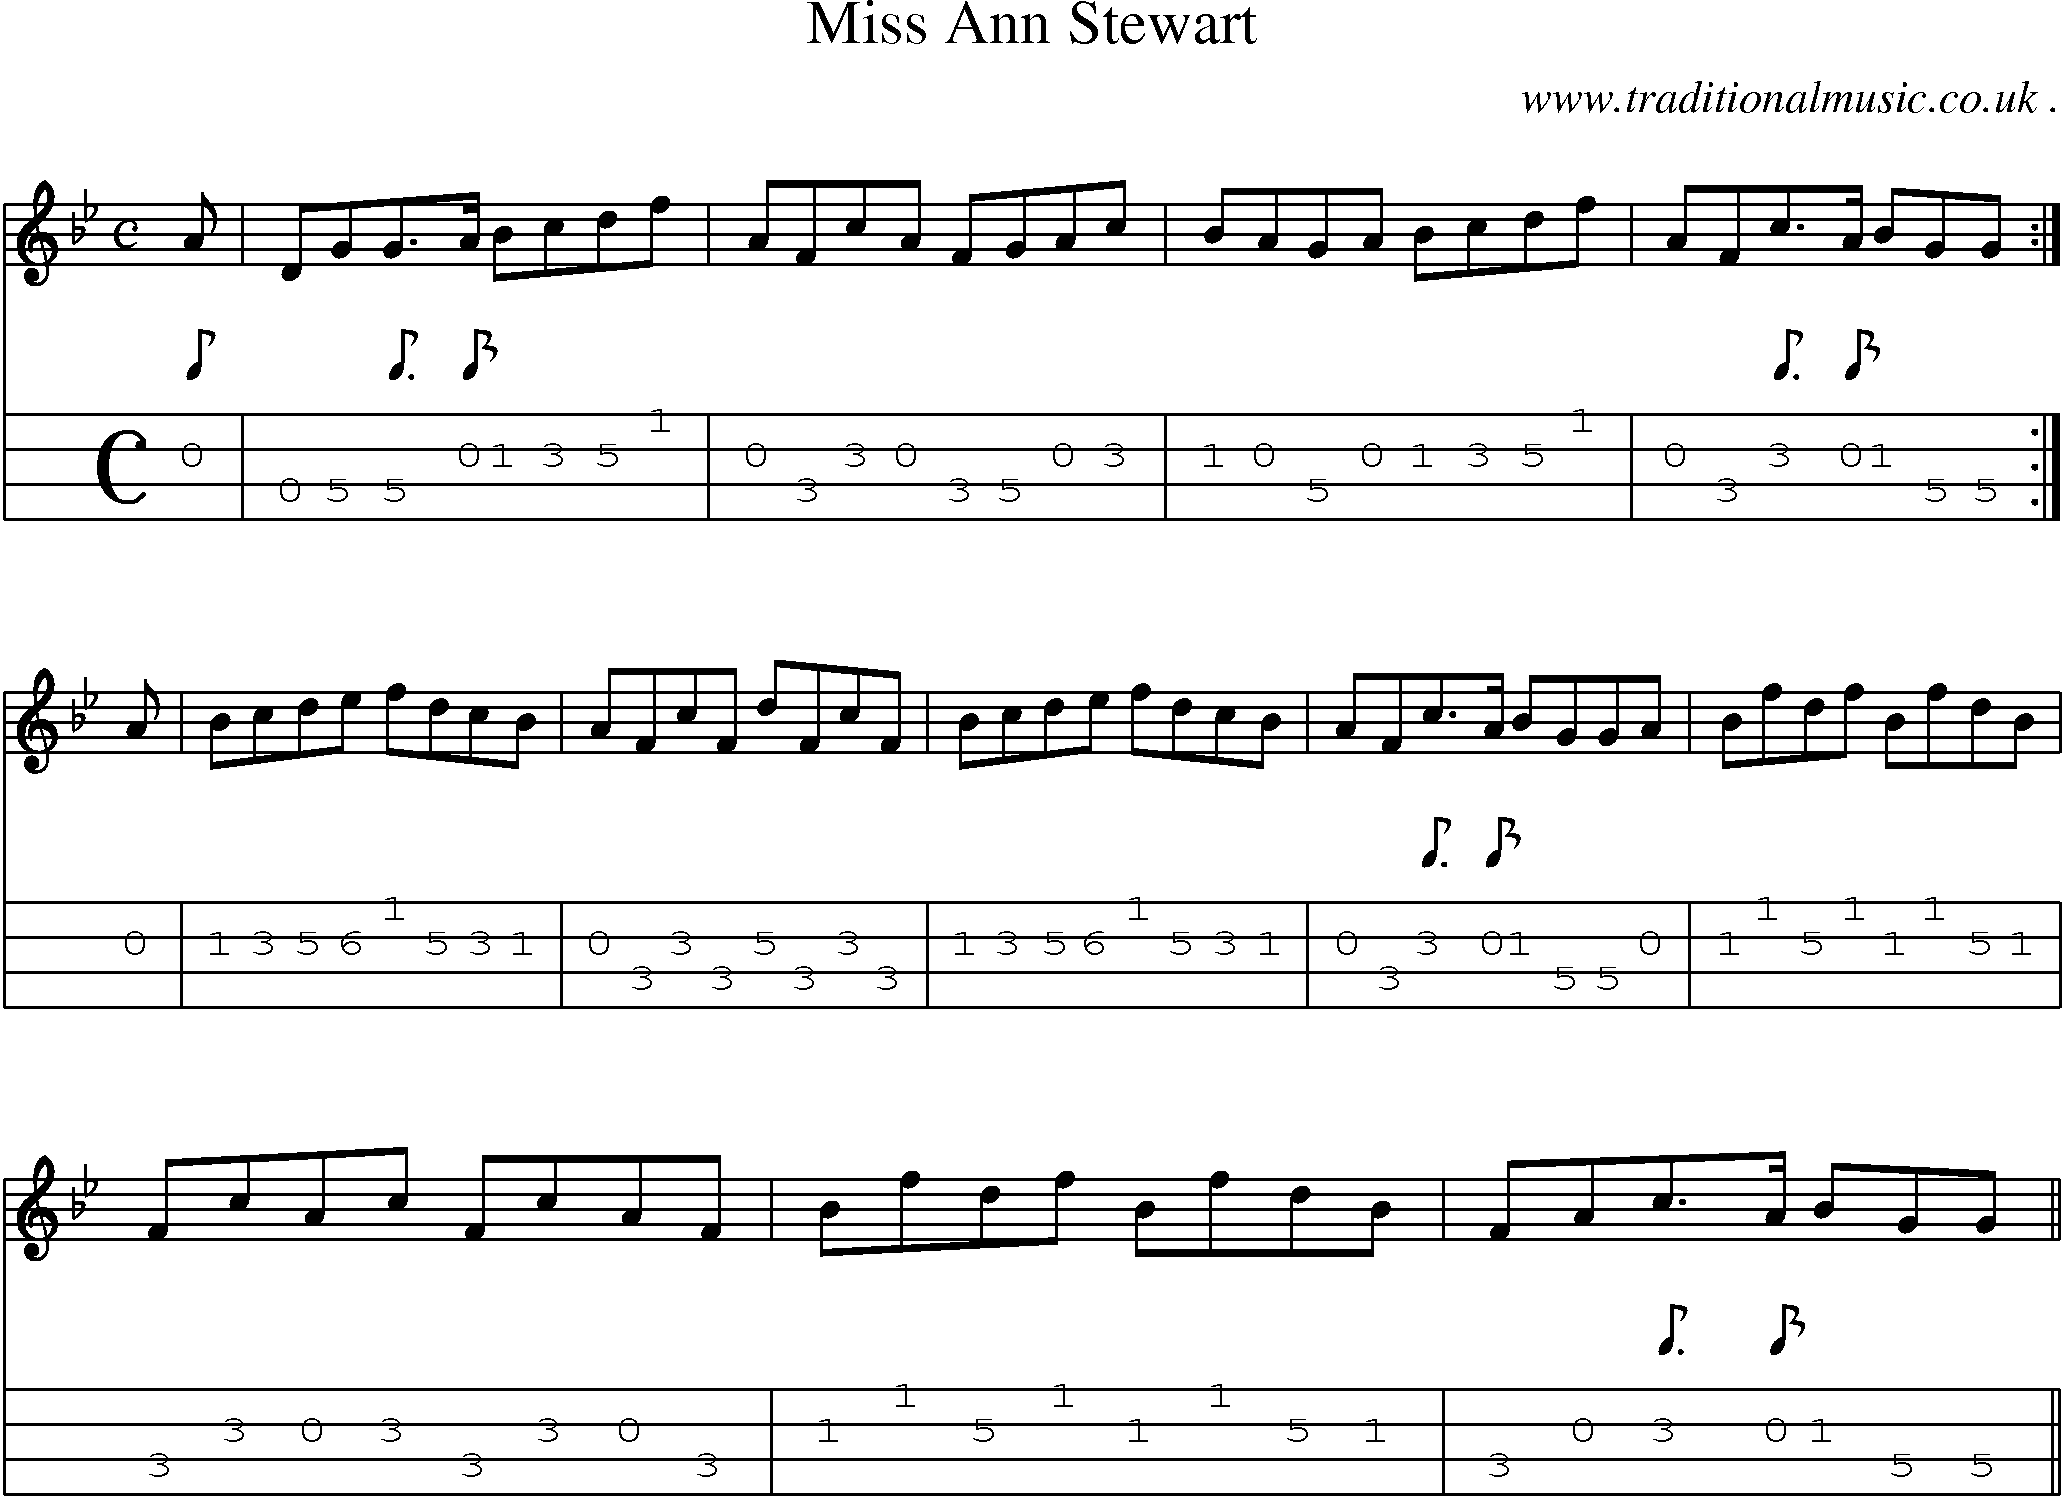 Sheet-music  score, Chords and Mandolin Tabs for Miss Ann Stewart